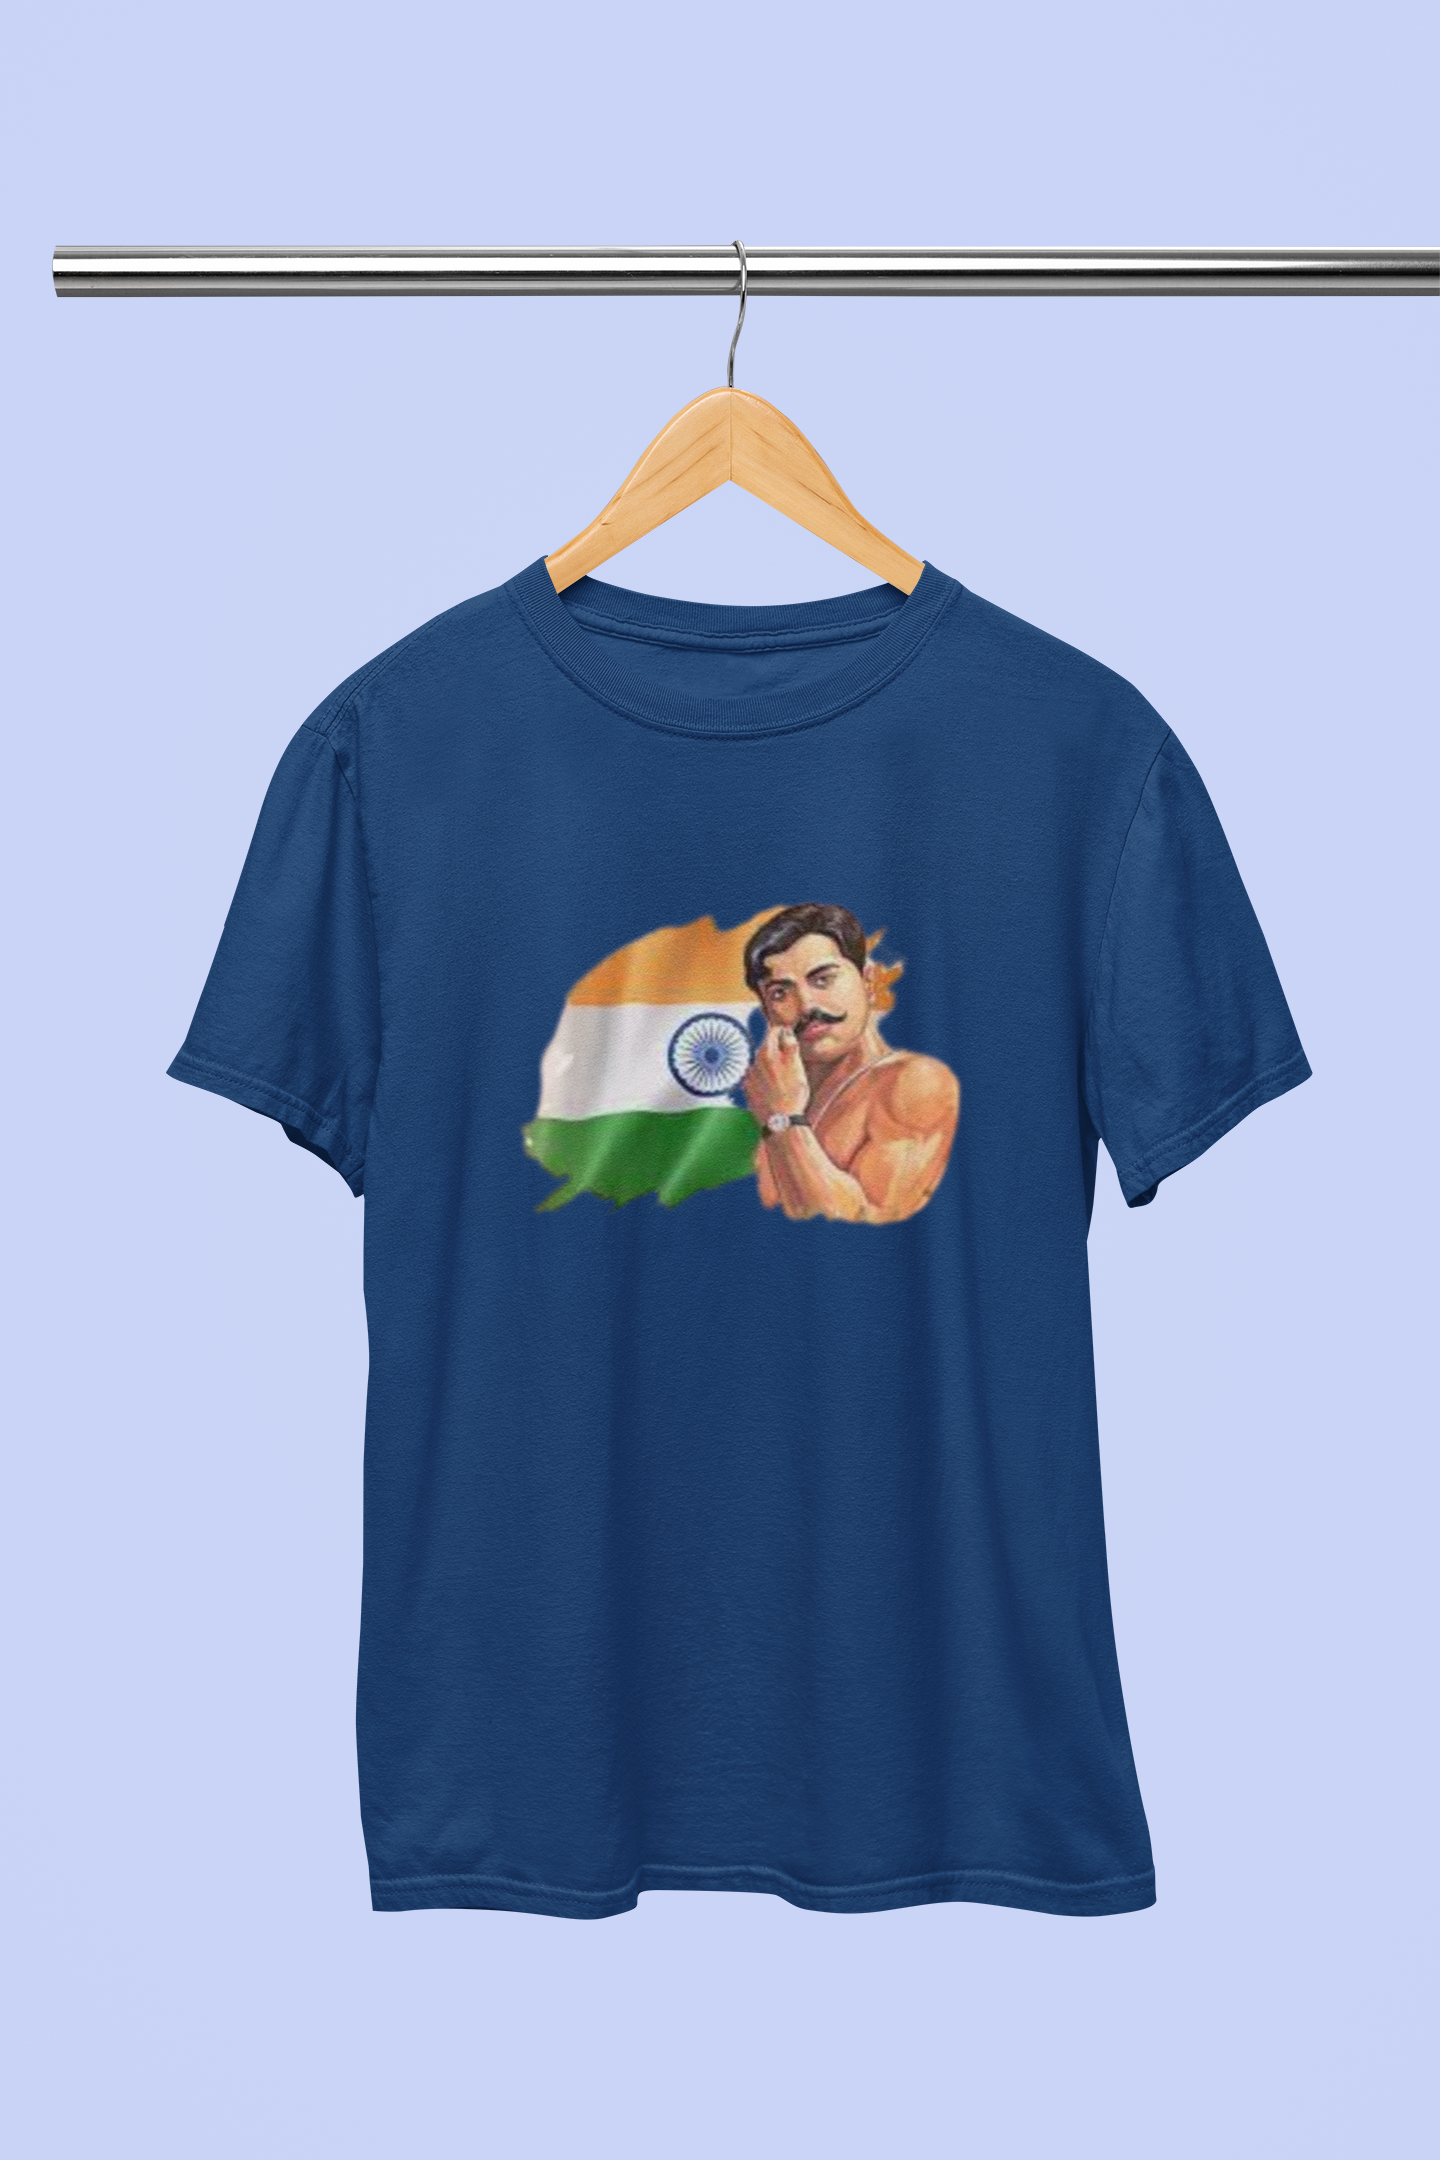 CHANDRA SHEKAR AZAD INDIA FLAG T-SHIRT